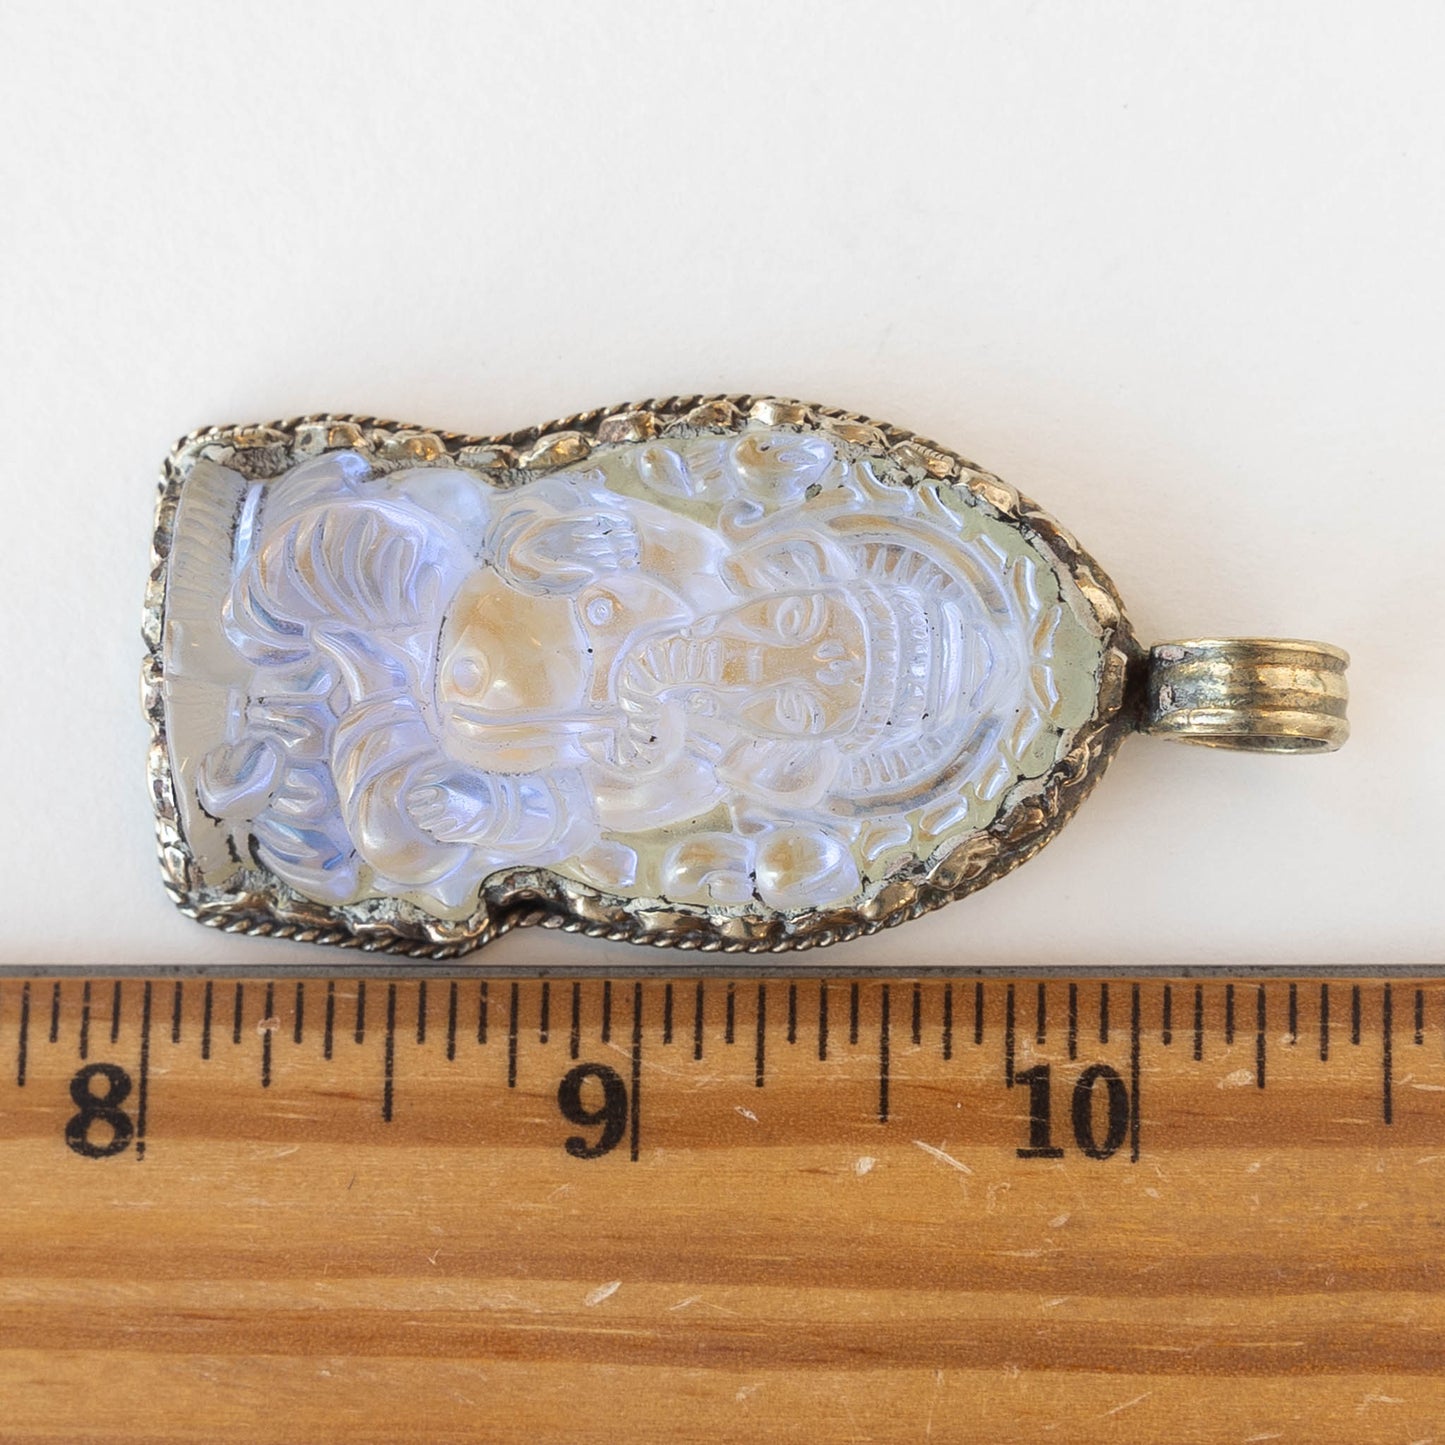 50mm Opalite Ganesh Pendant in Tibetan Silver Silver - 1 piece